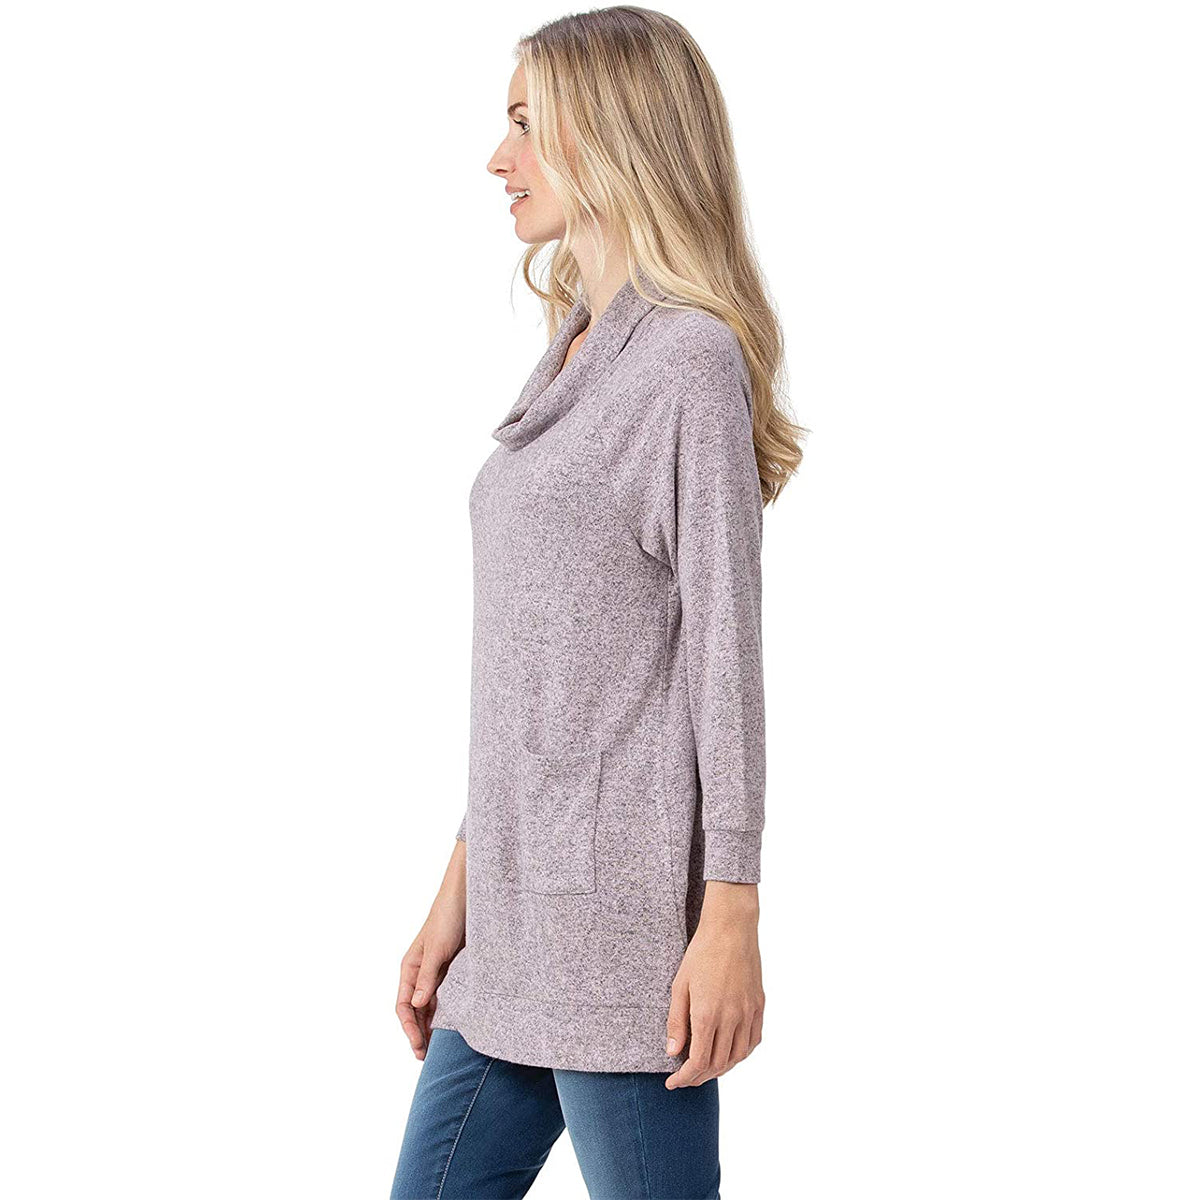 Addison Meadow Women’s Cowl Neck Tunic Sweater – Soft, Stylish